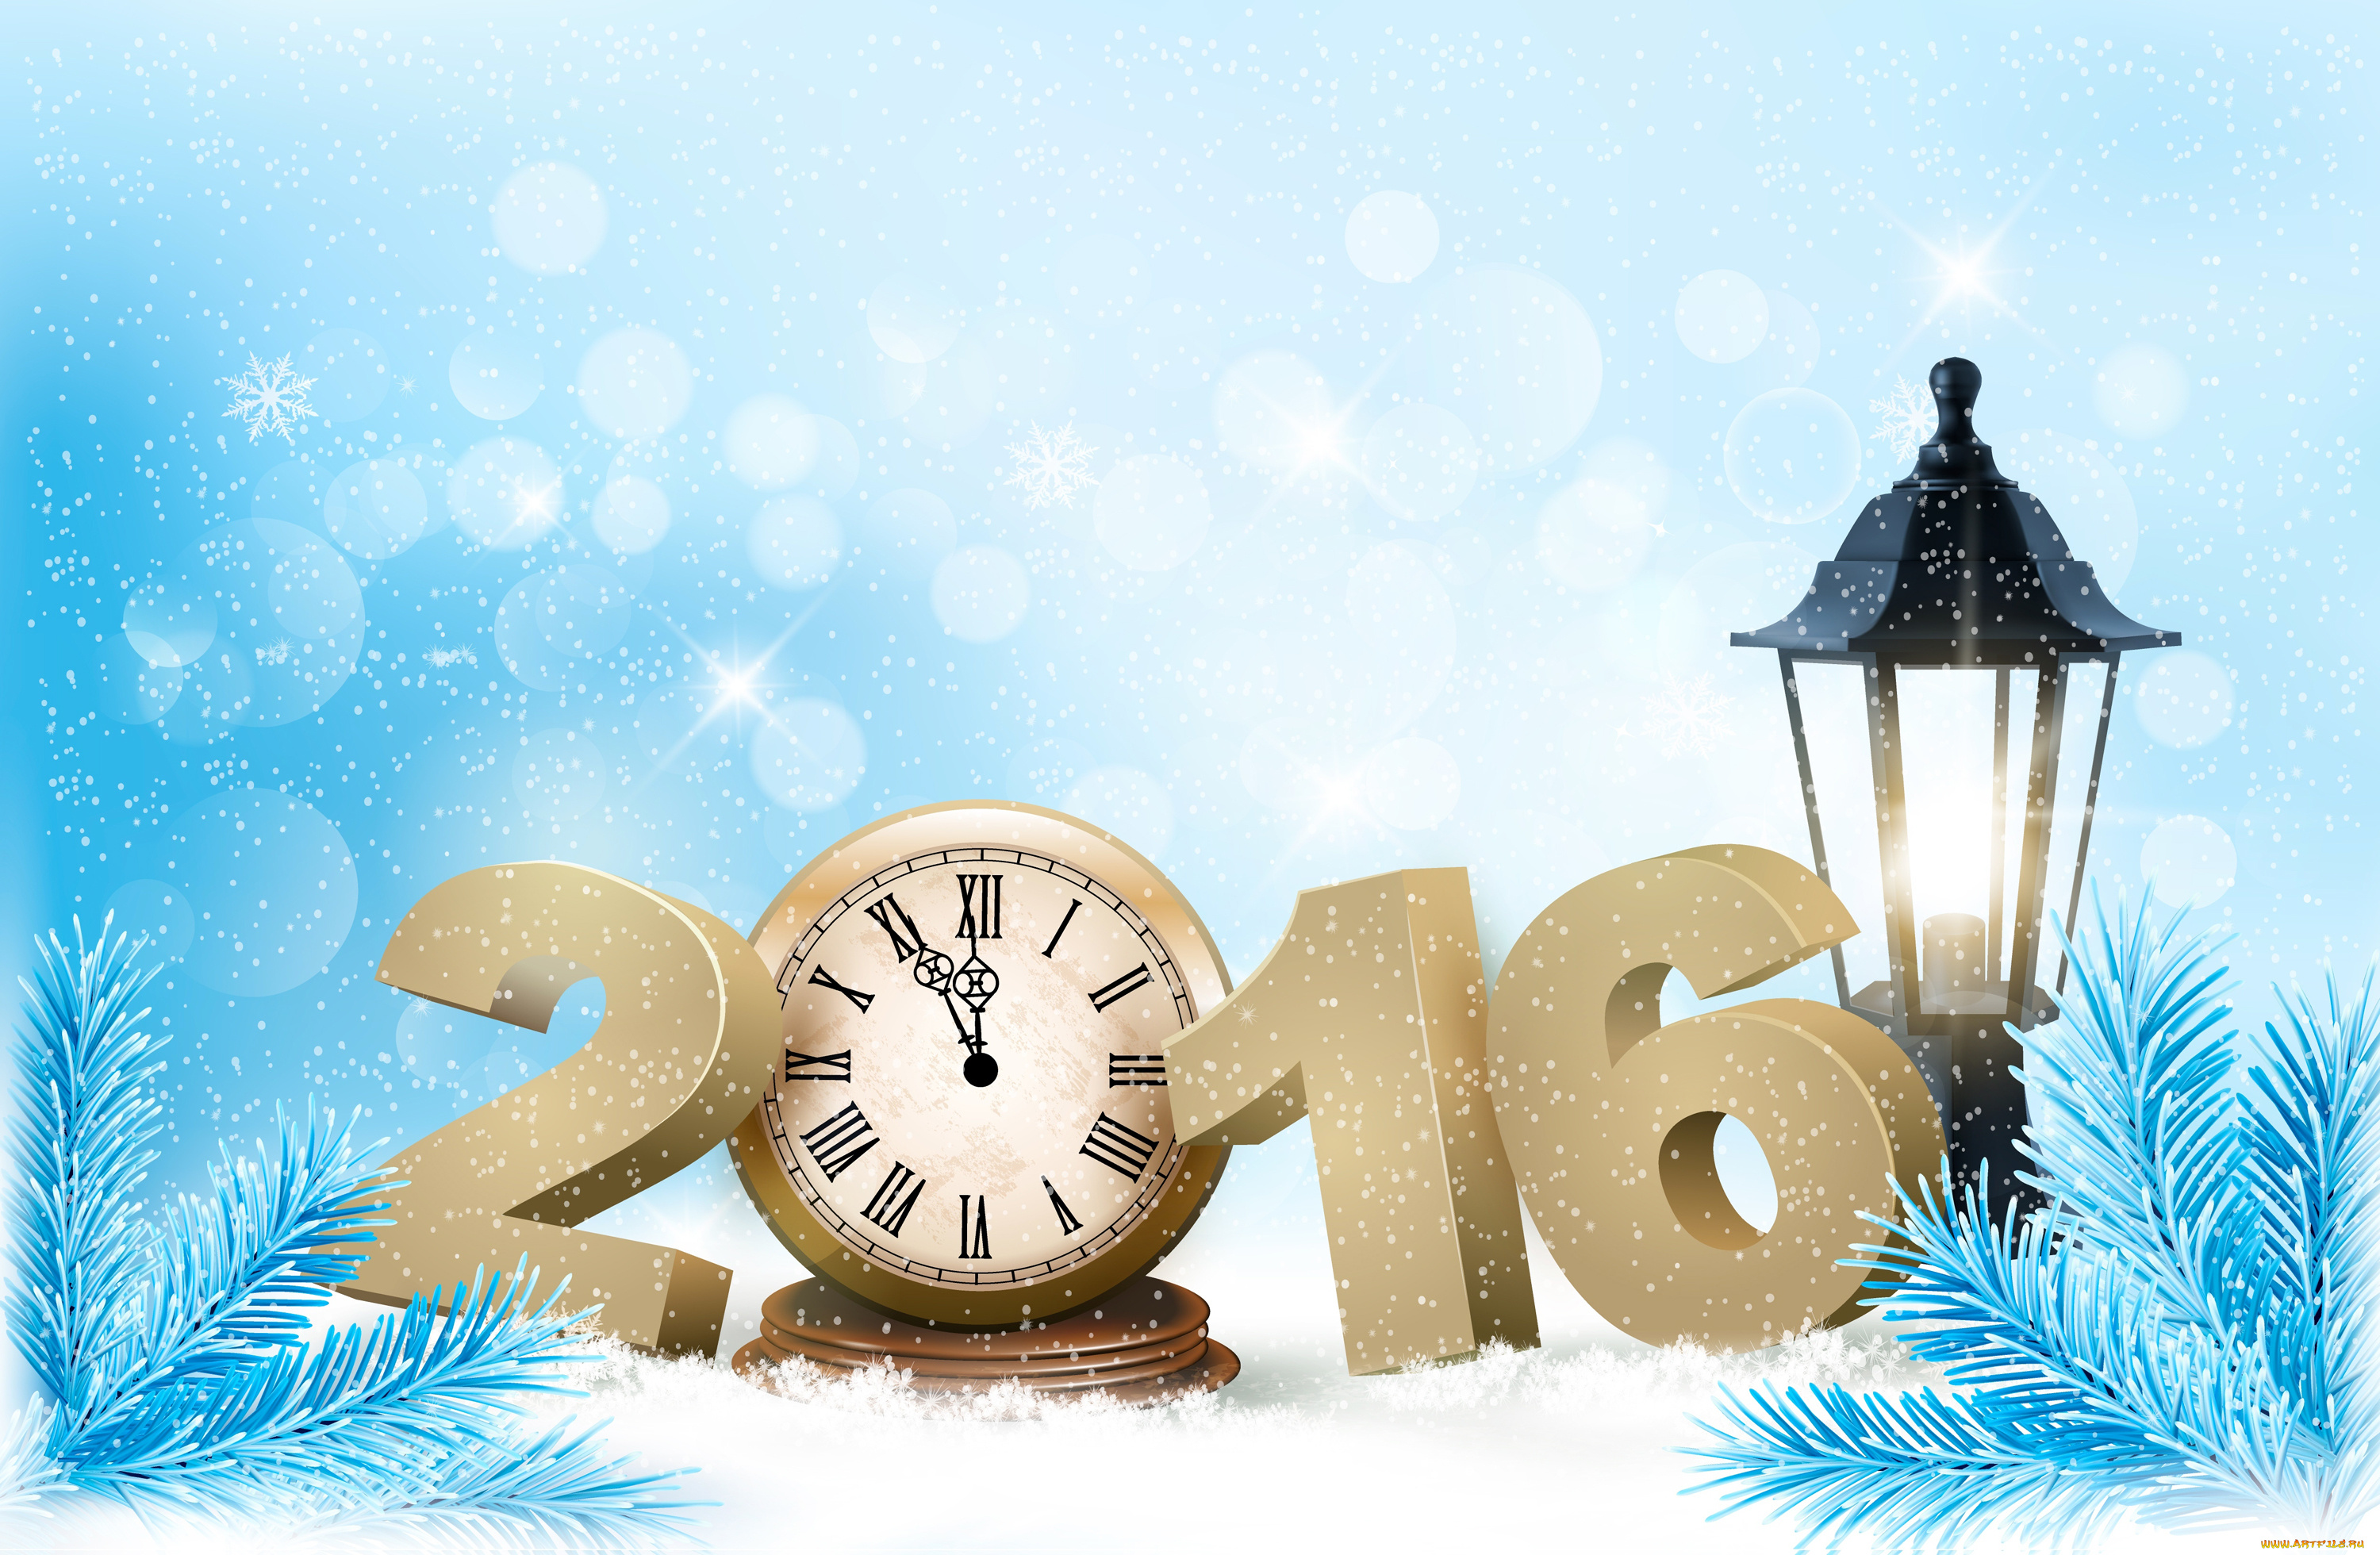 New year riches. Часы новогодние. Новогодние открытки с часами. Новый год часы. Новогодний фон с часами.